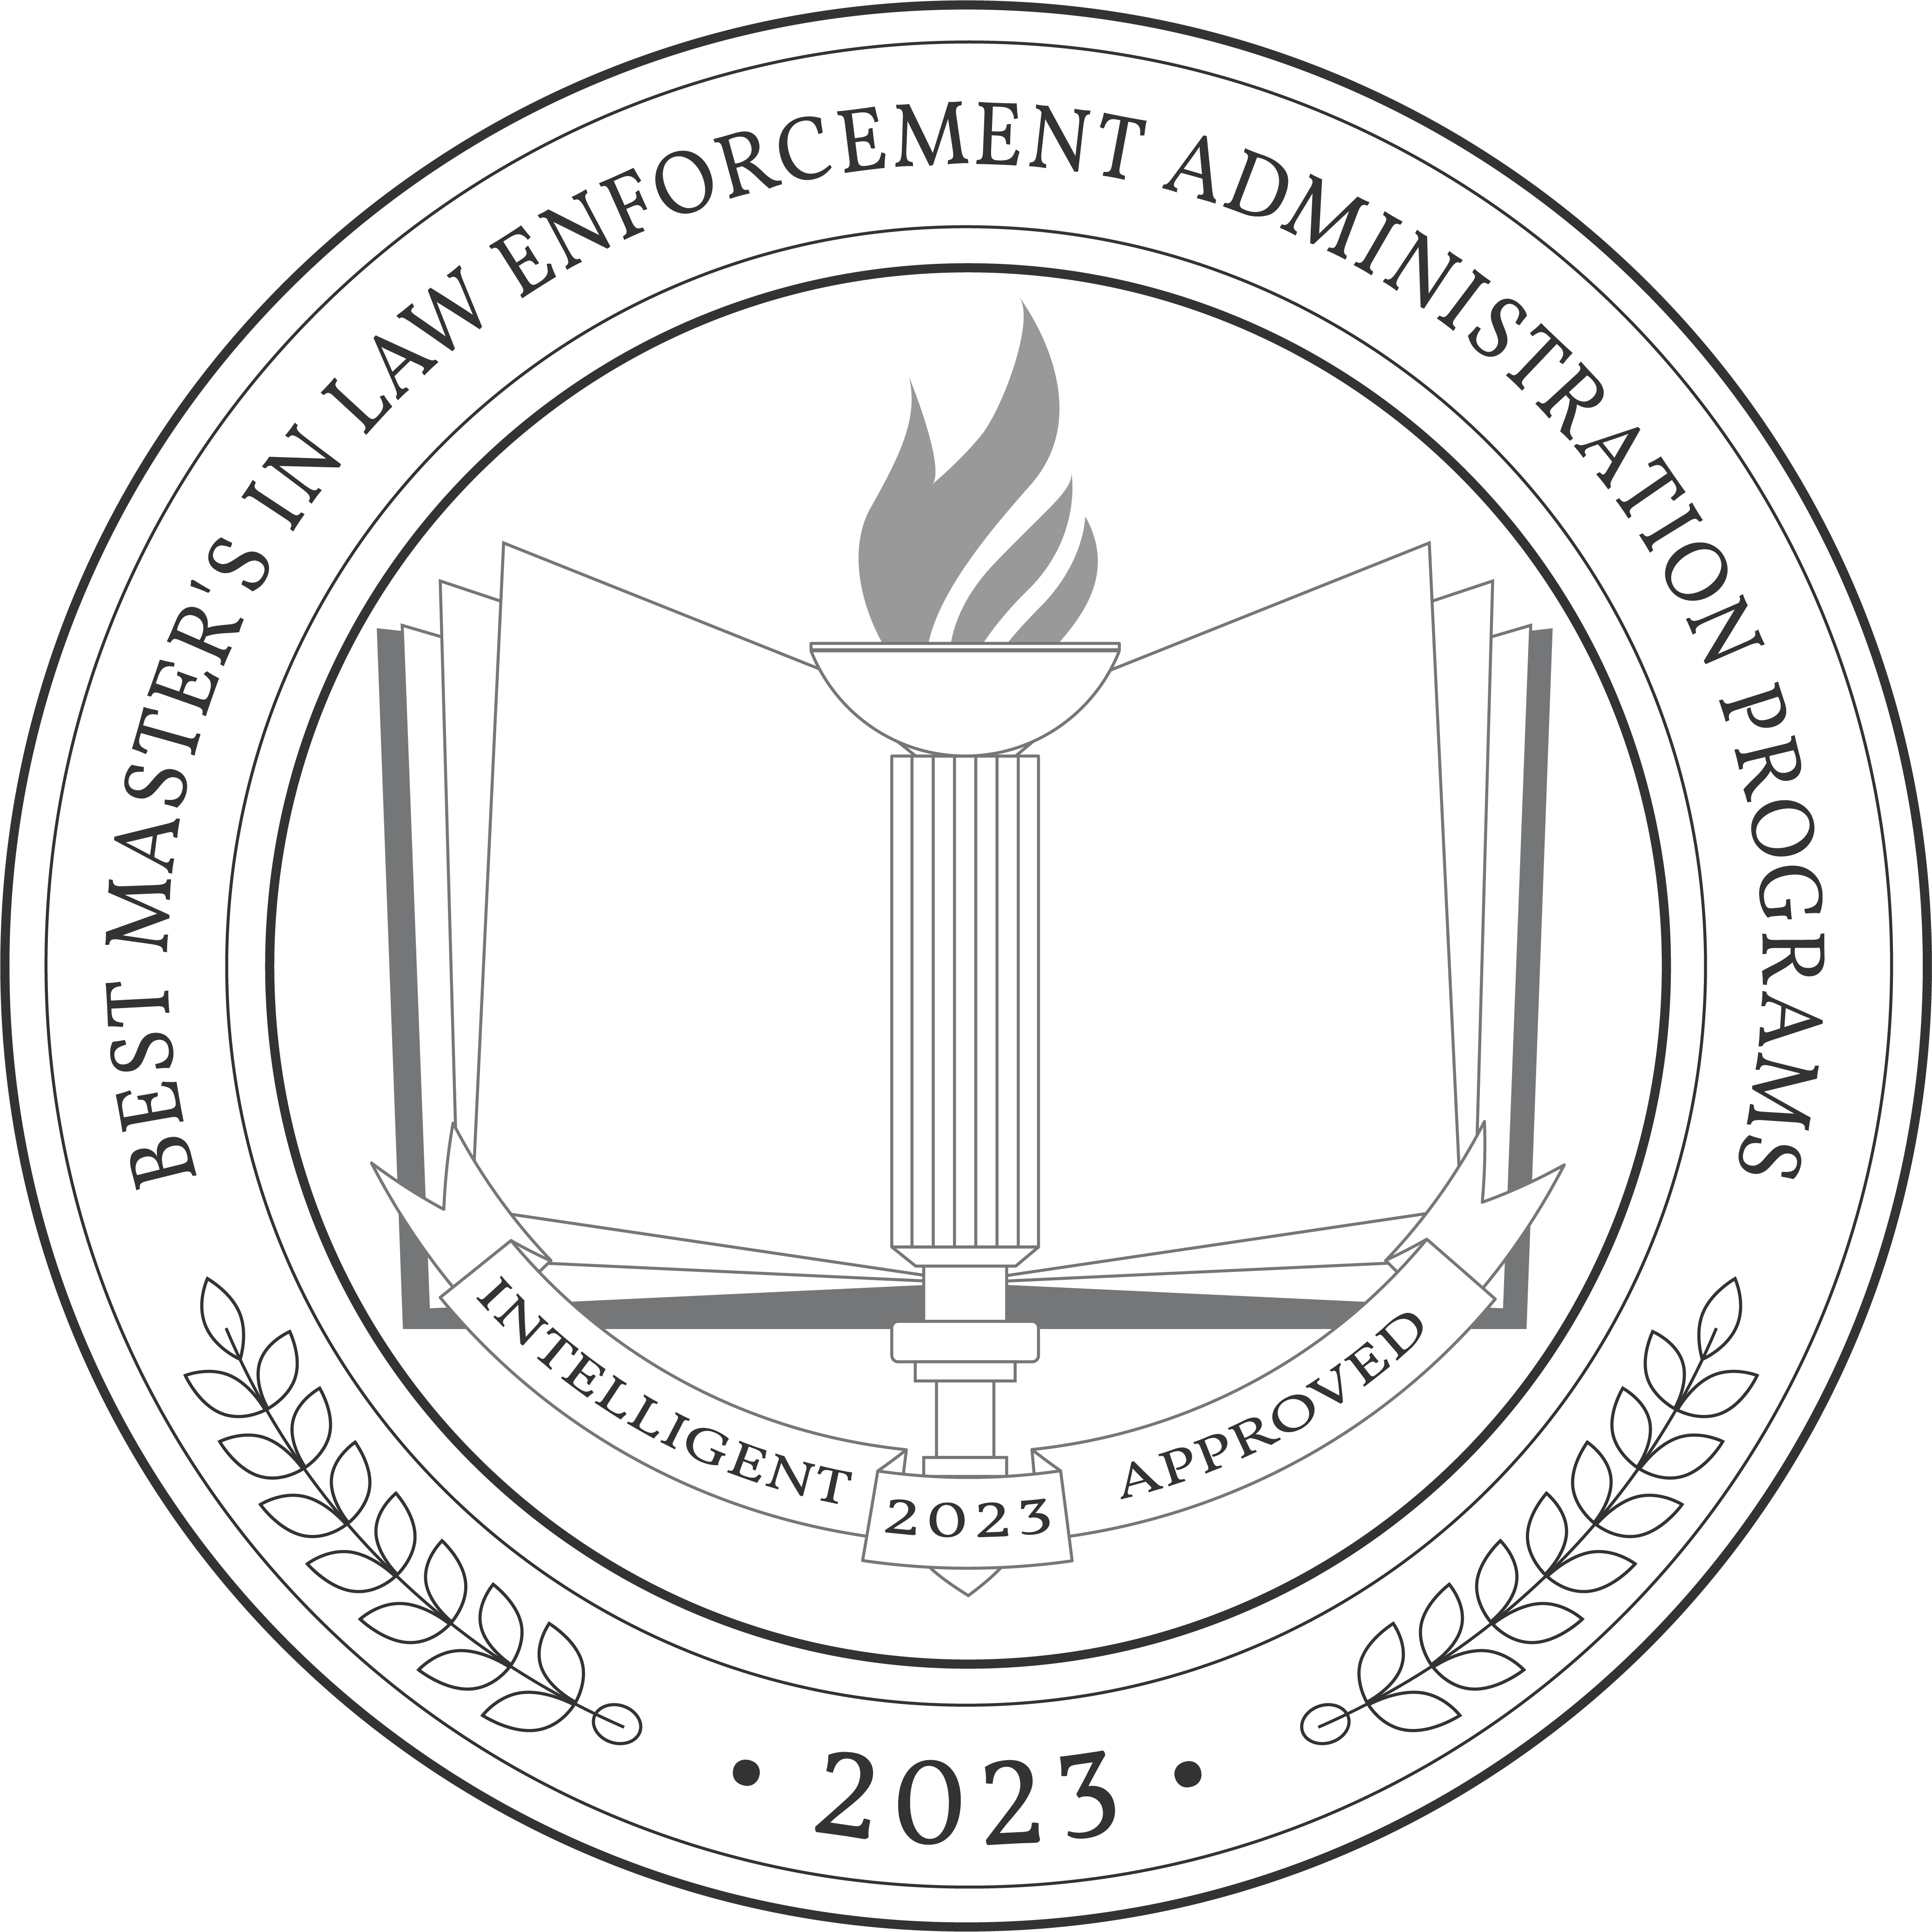 phd programs for law enforcement